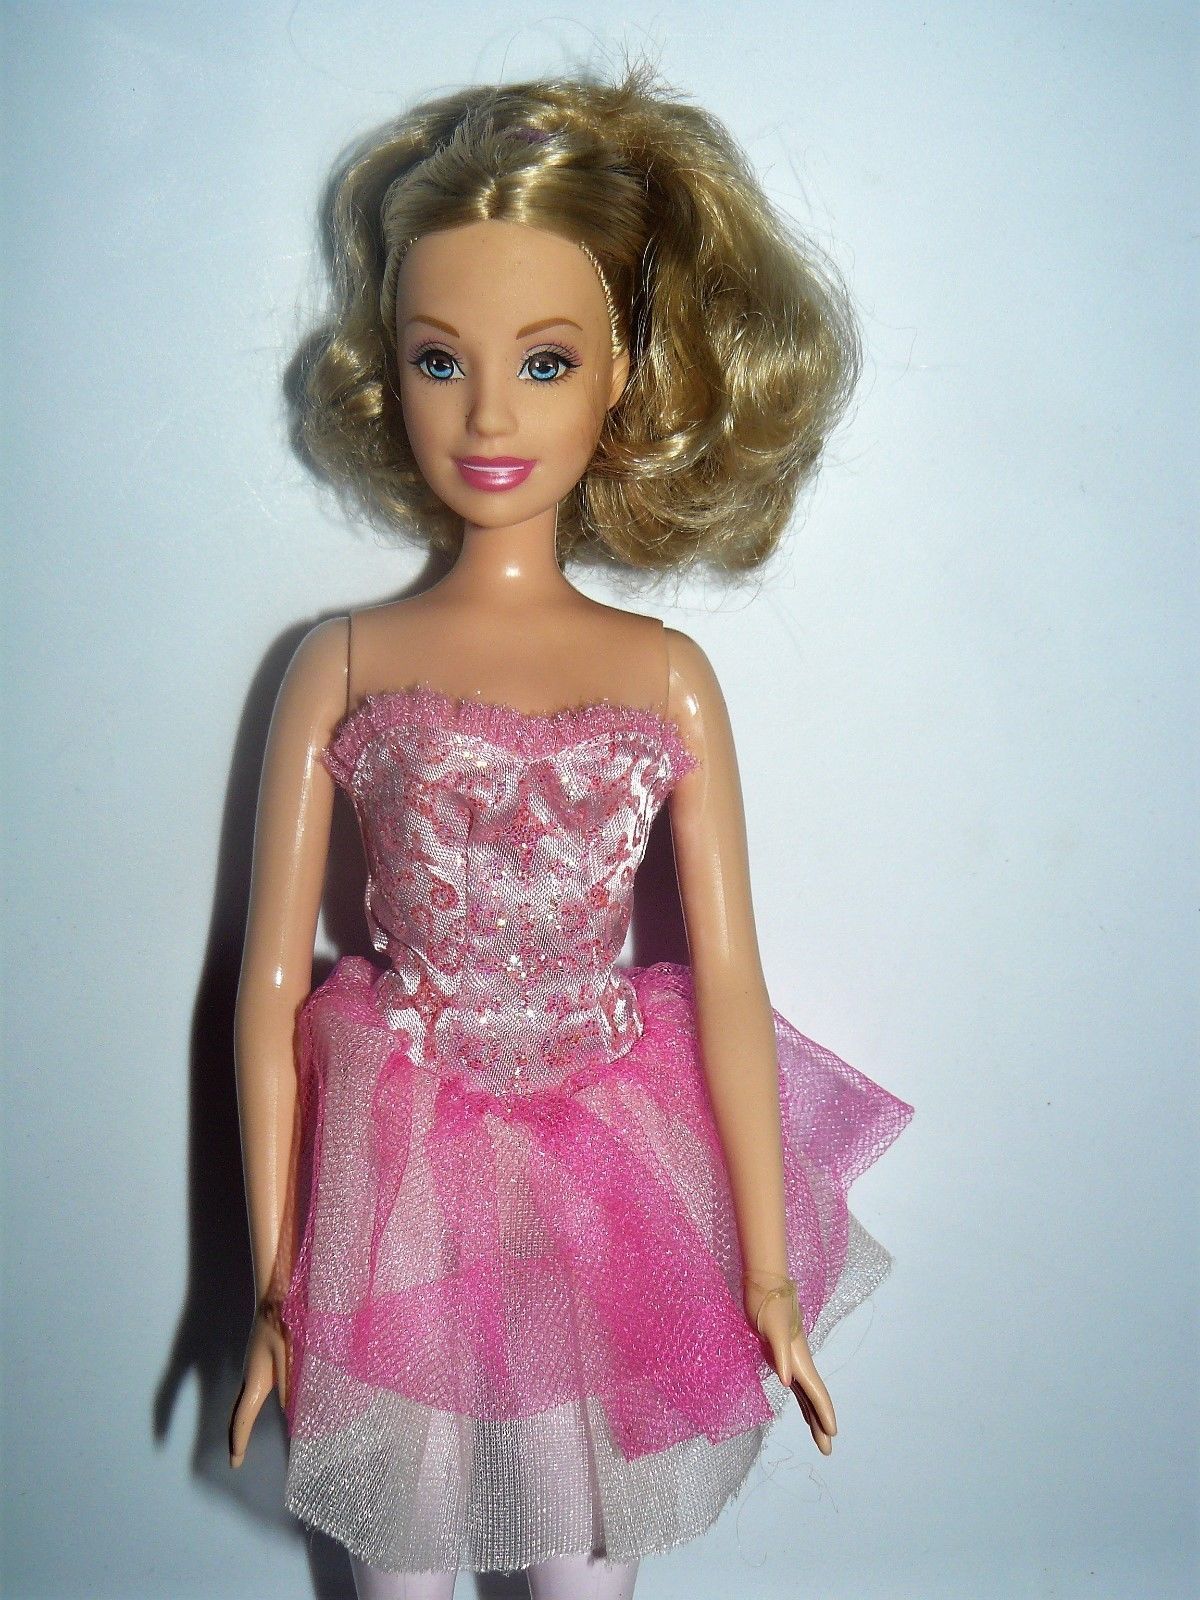 2000s barbie